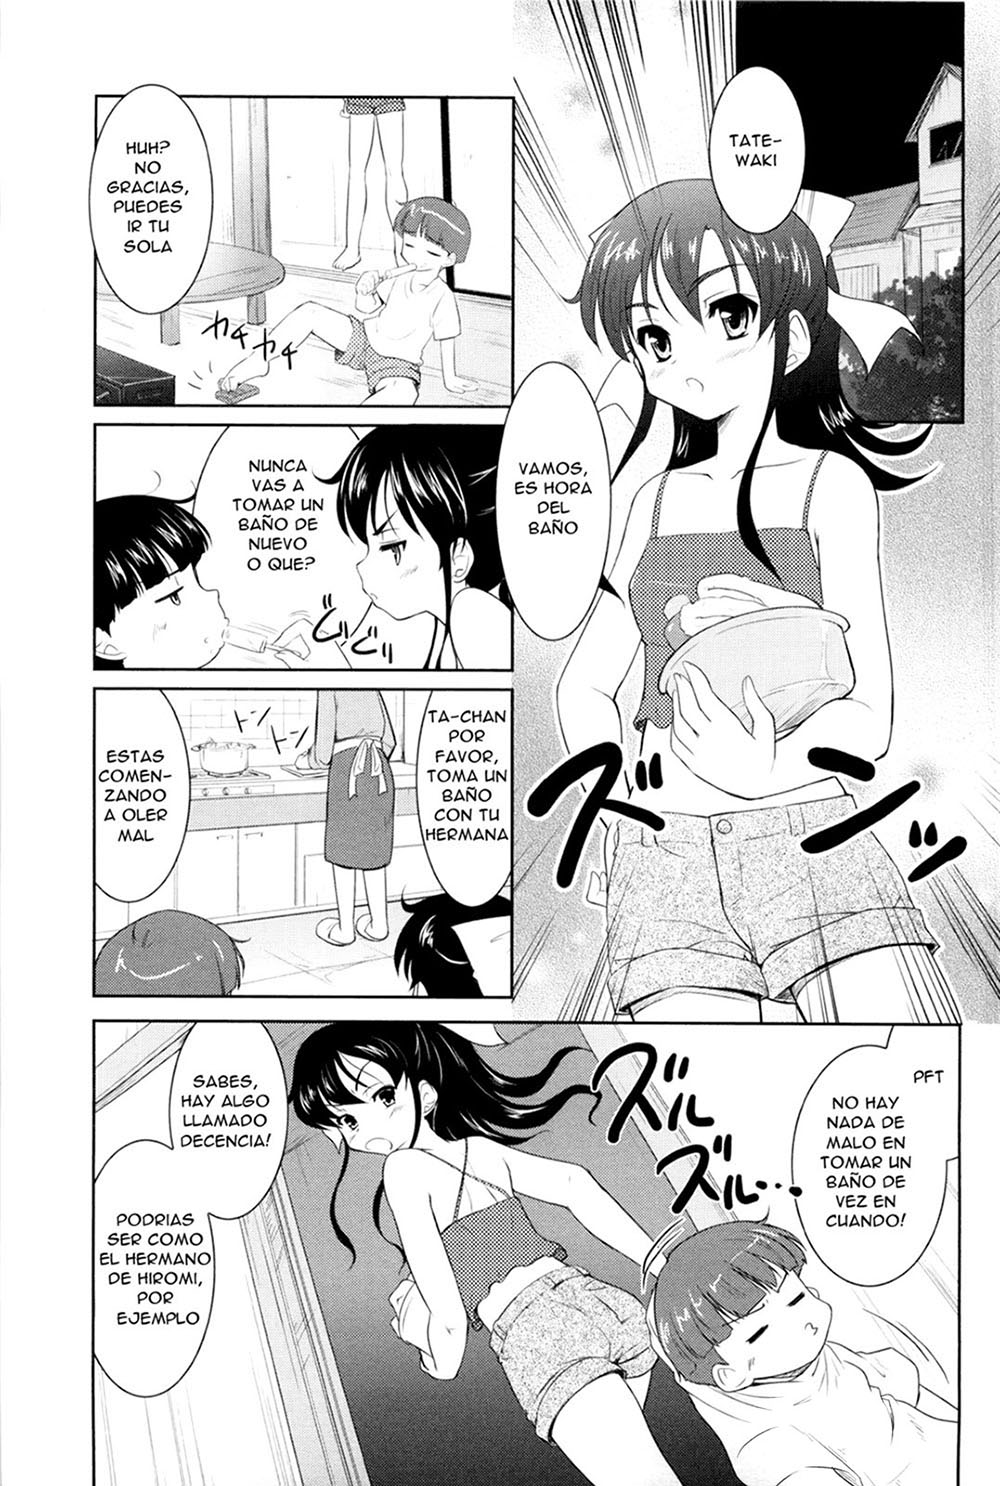 Violando a mi Hermana en el Baño - 1 - Comics Porno - Hentai Manga - Cartoon XXX